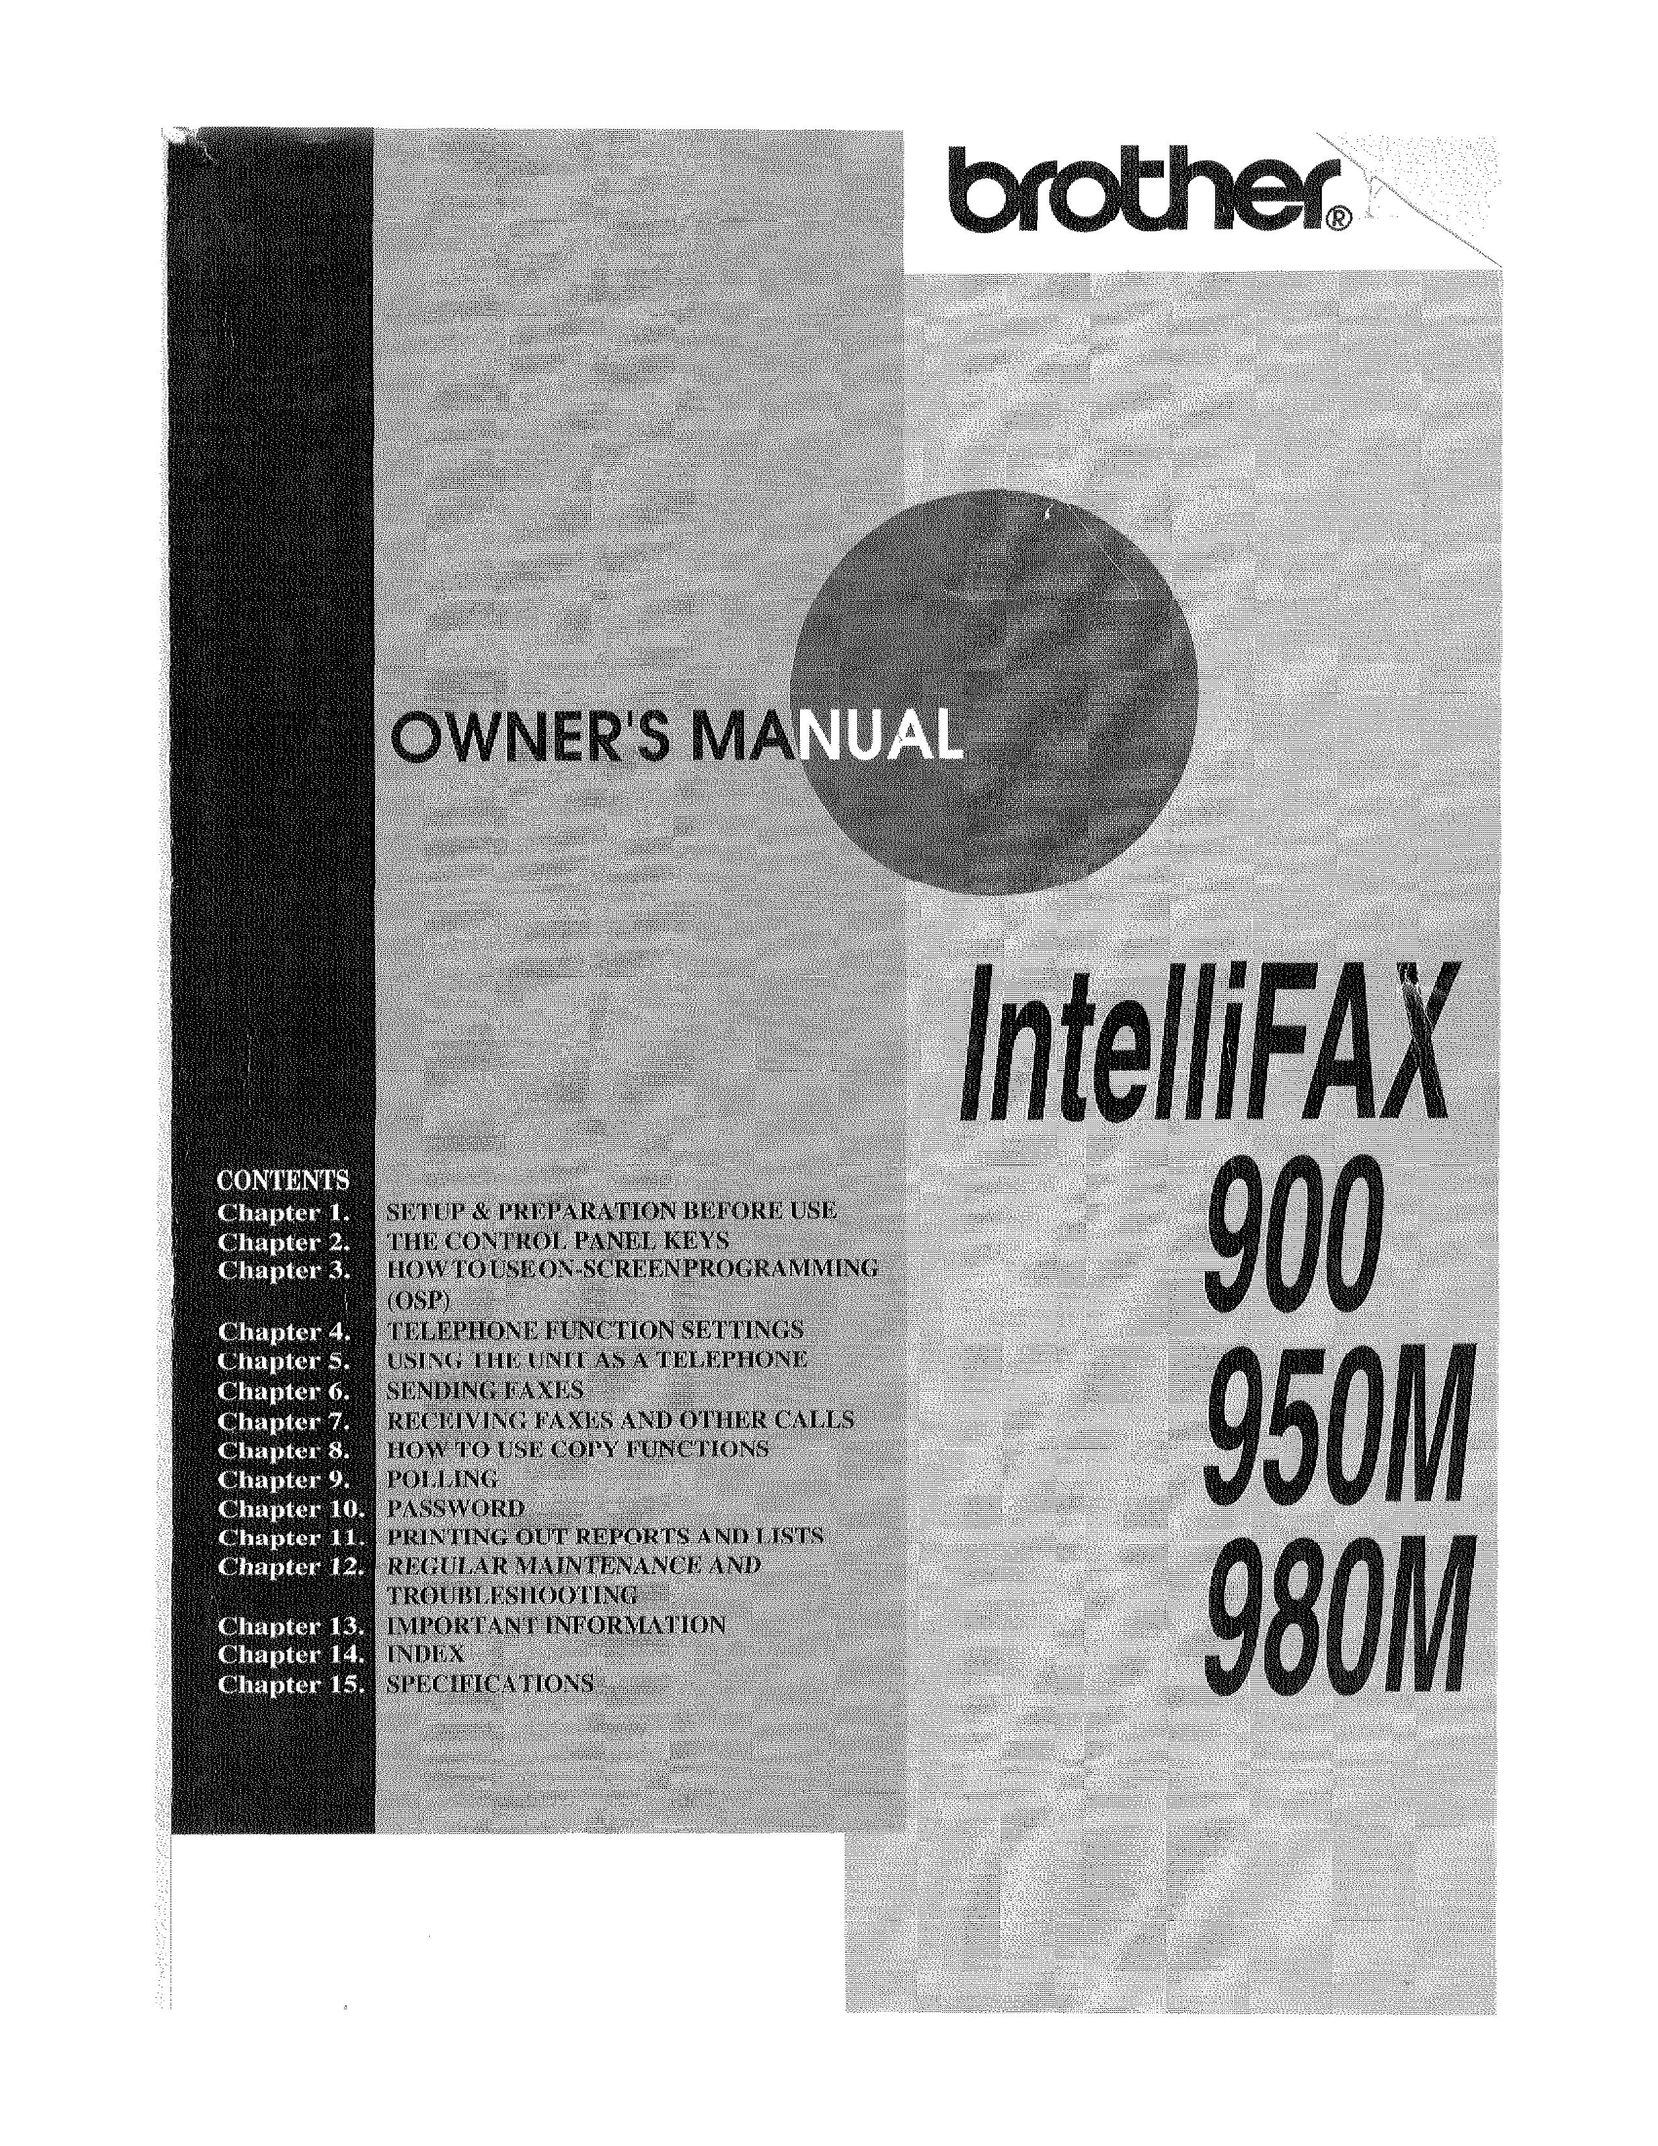 Brother 950M Fax Machine User Manual